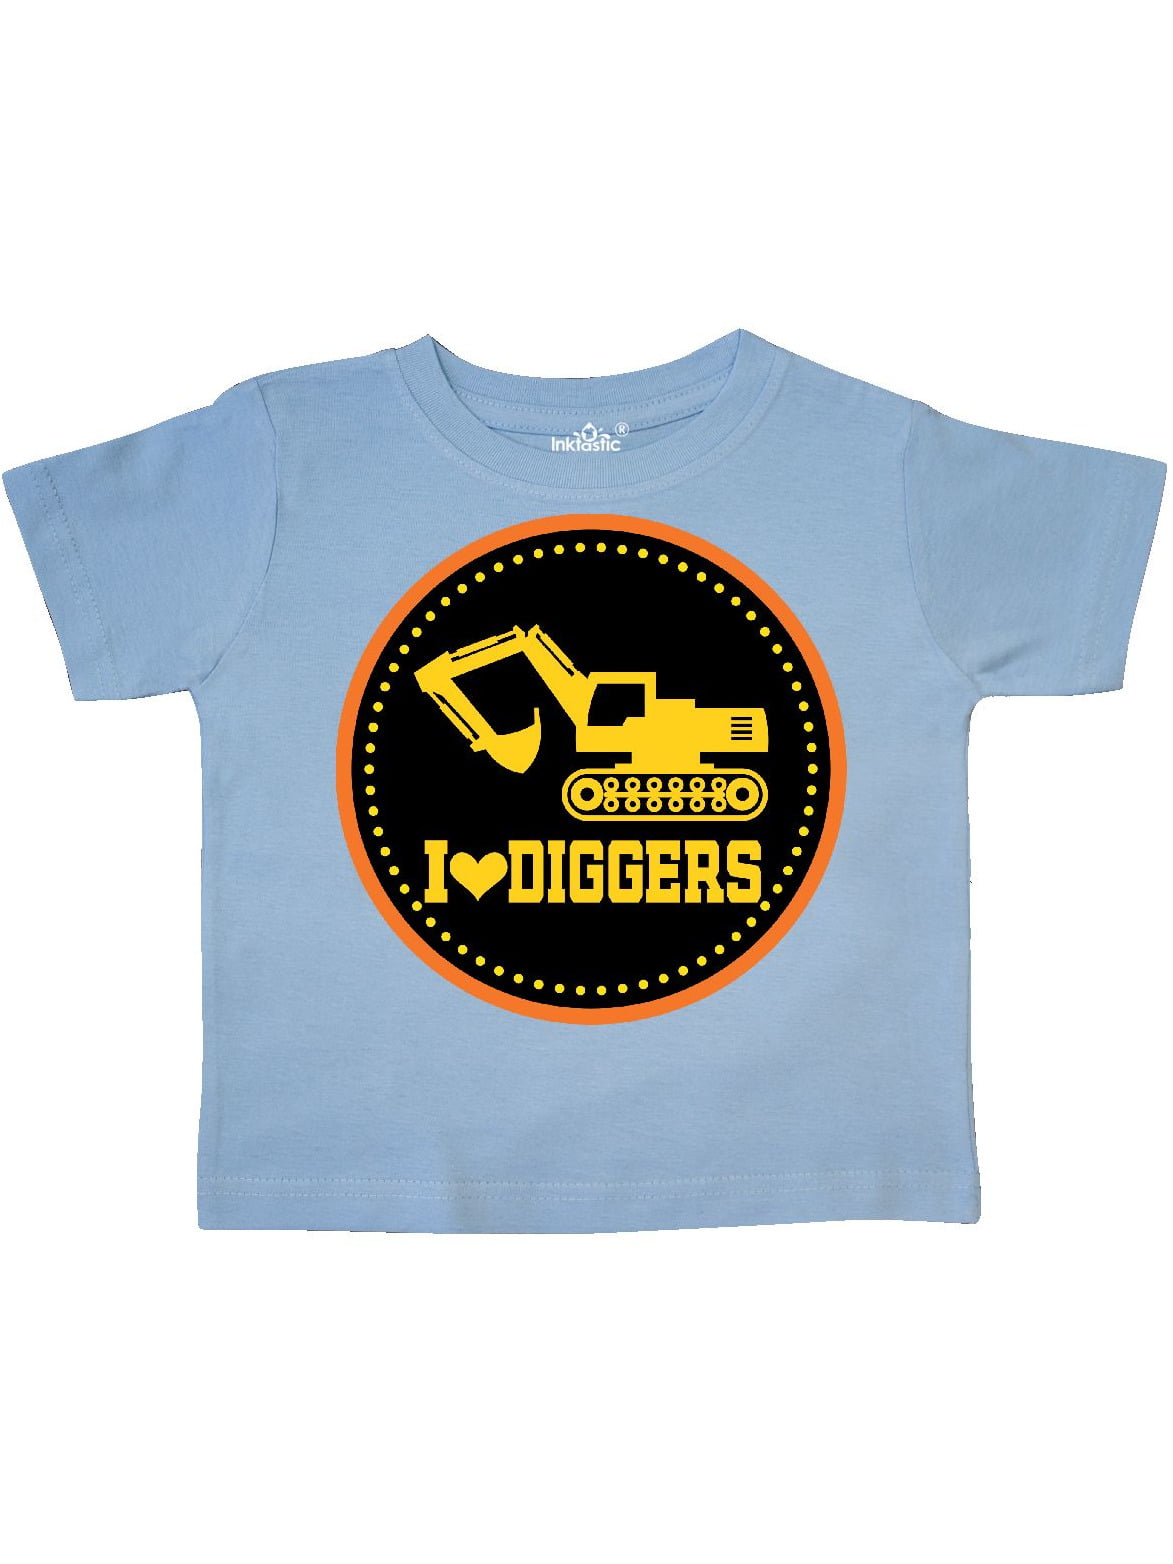 Veepola Kids Tops Baby Girls Boys Long Sleeve Cartoon Dinosaur Printed Cute Blouse T-Shirt. 